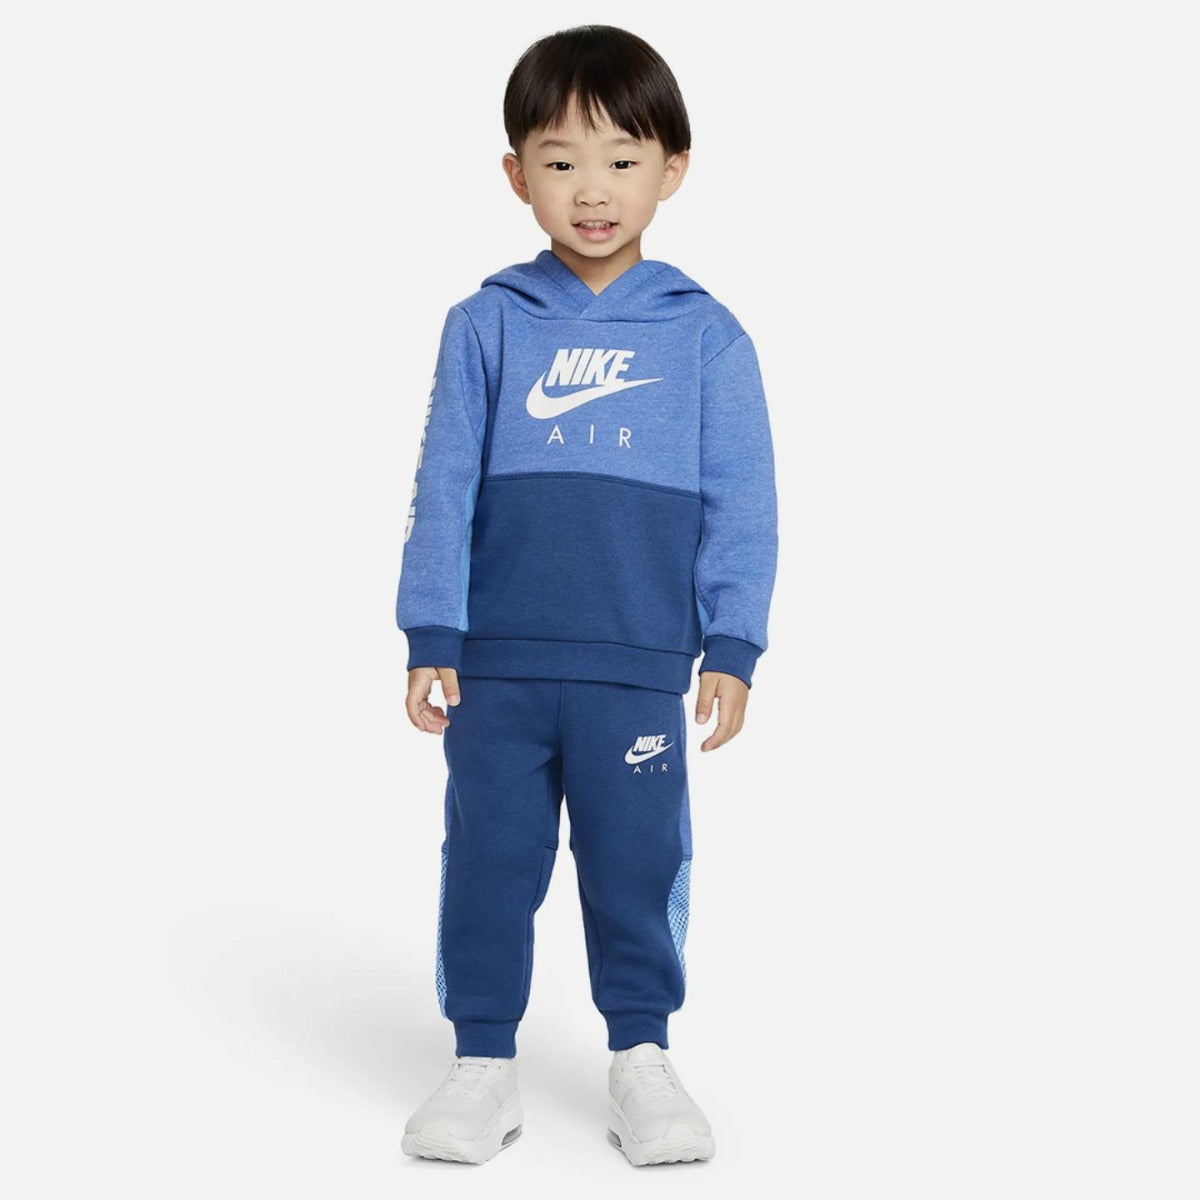 Conjunto de chándal Nike Air Baby - Azul/Blanco